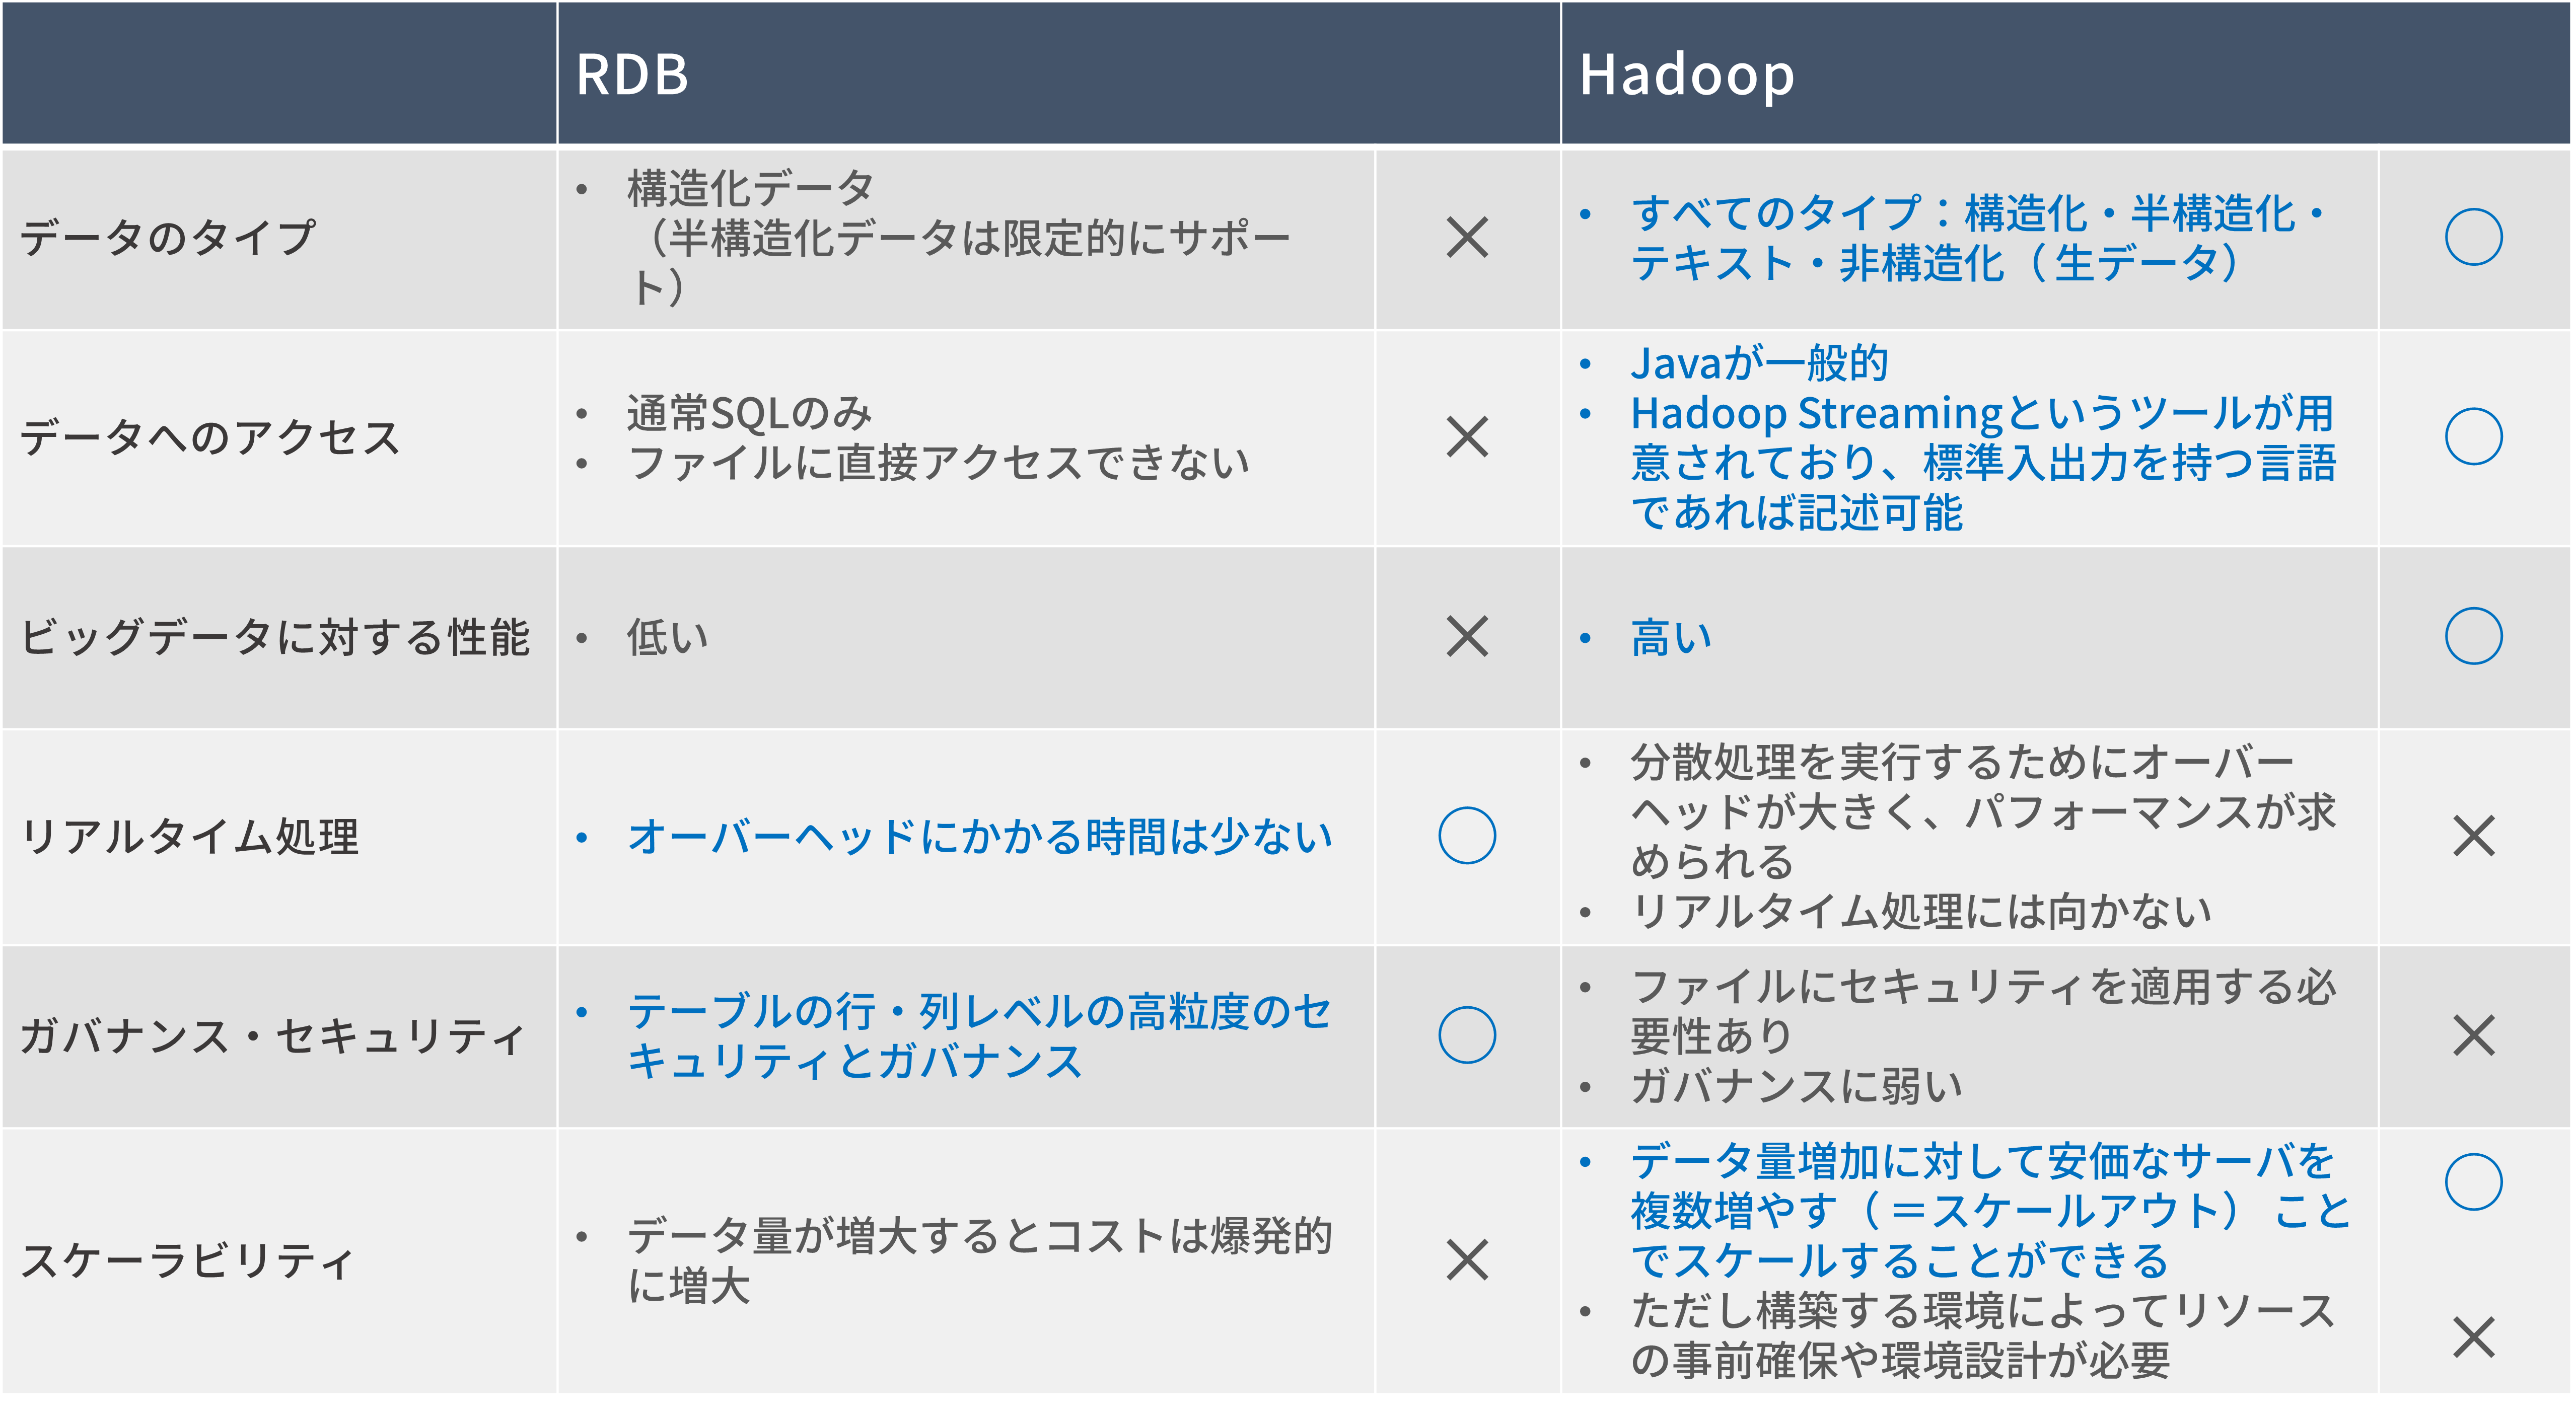 RDBとHadoopのメリット・デメリット比較